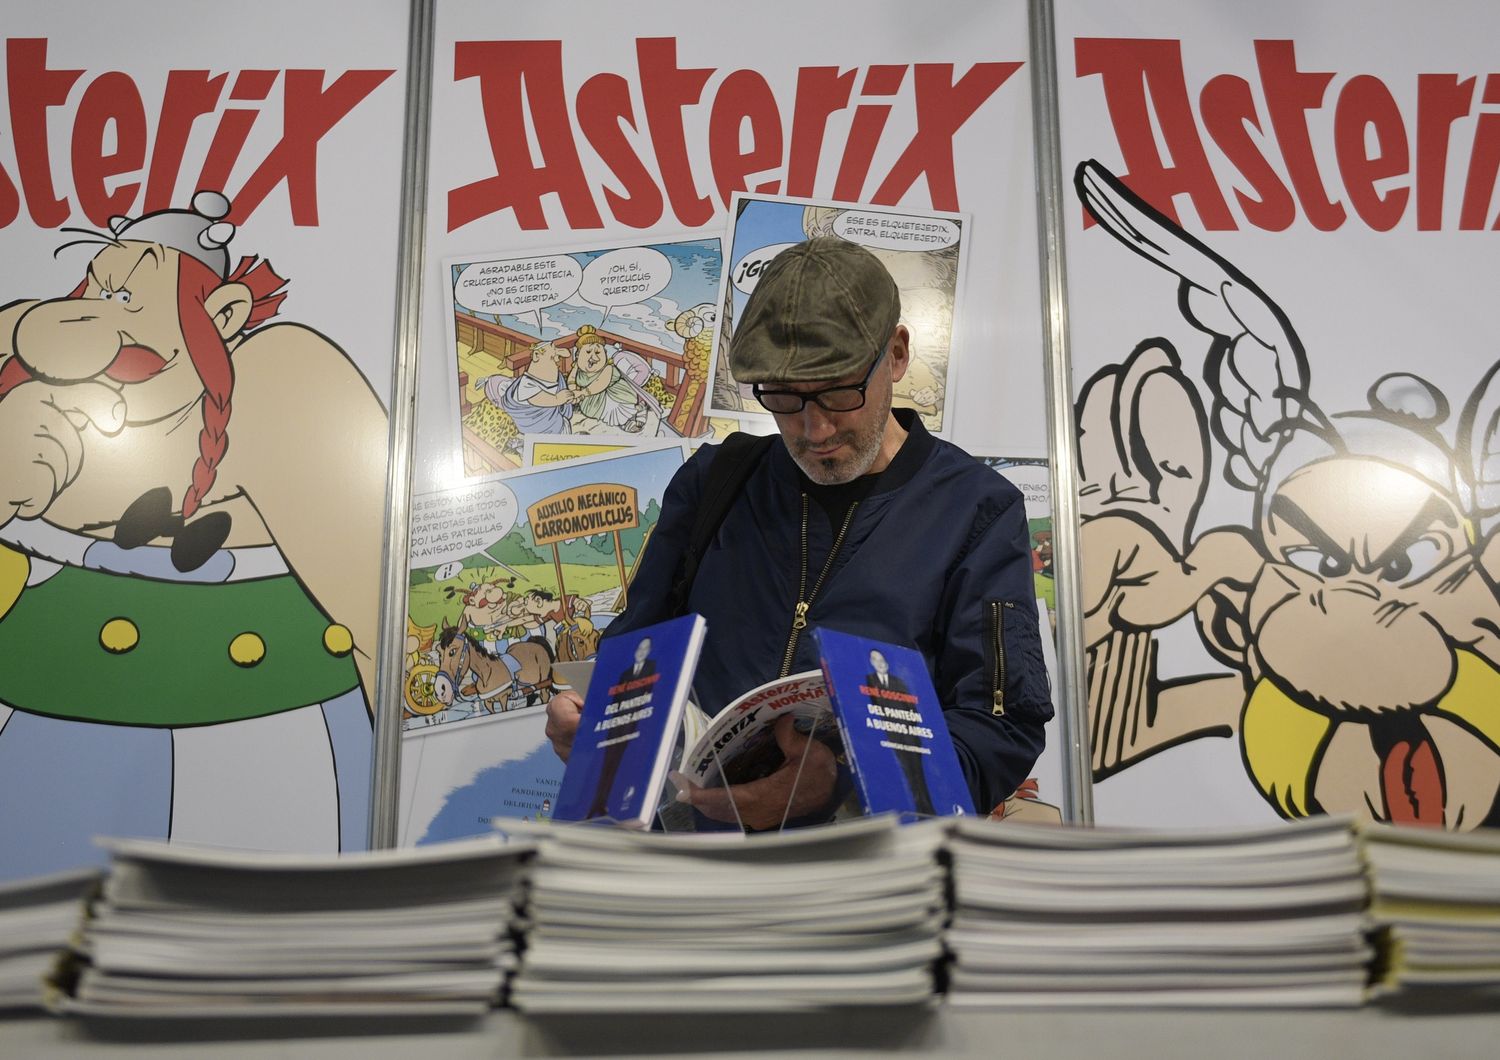 &nbsp;Asterix, fumetto